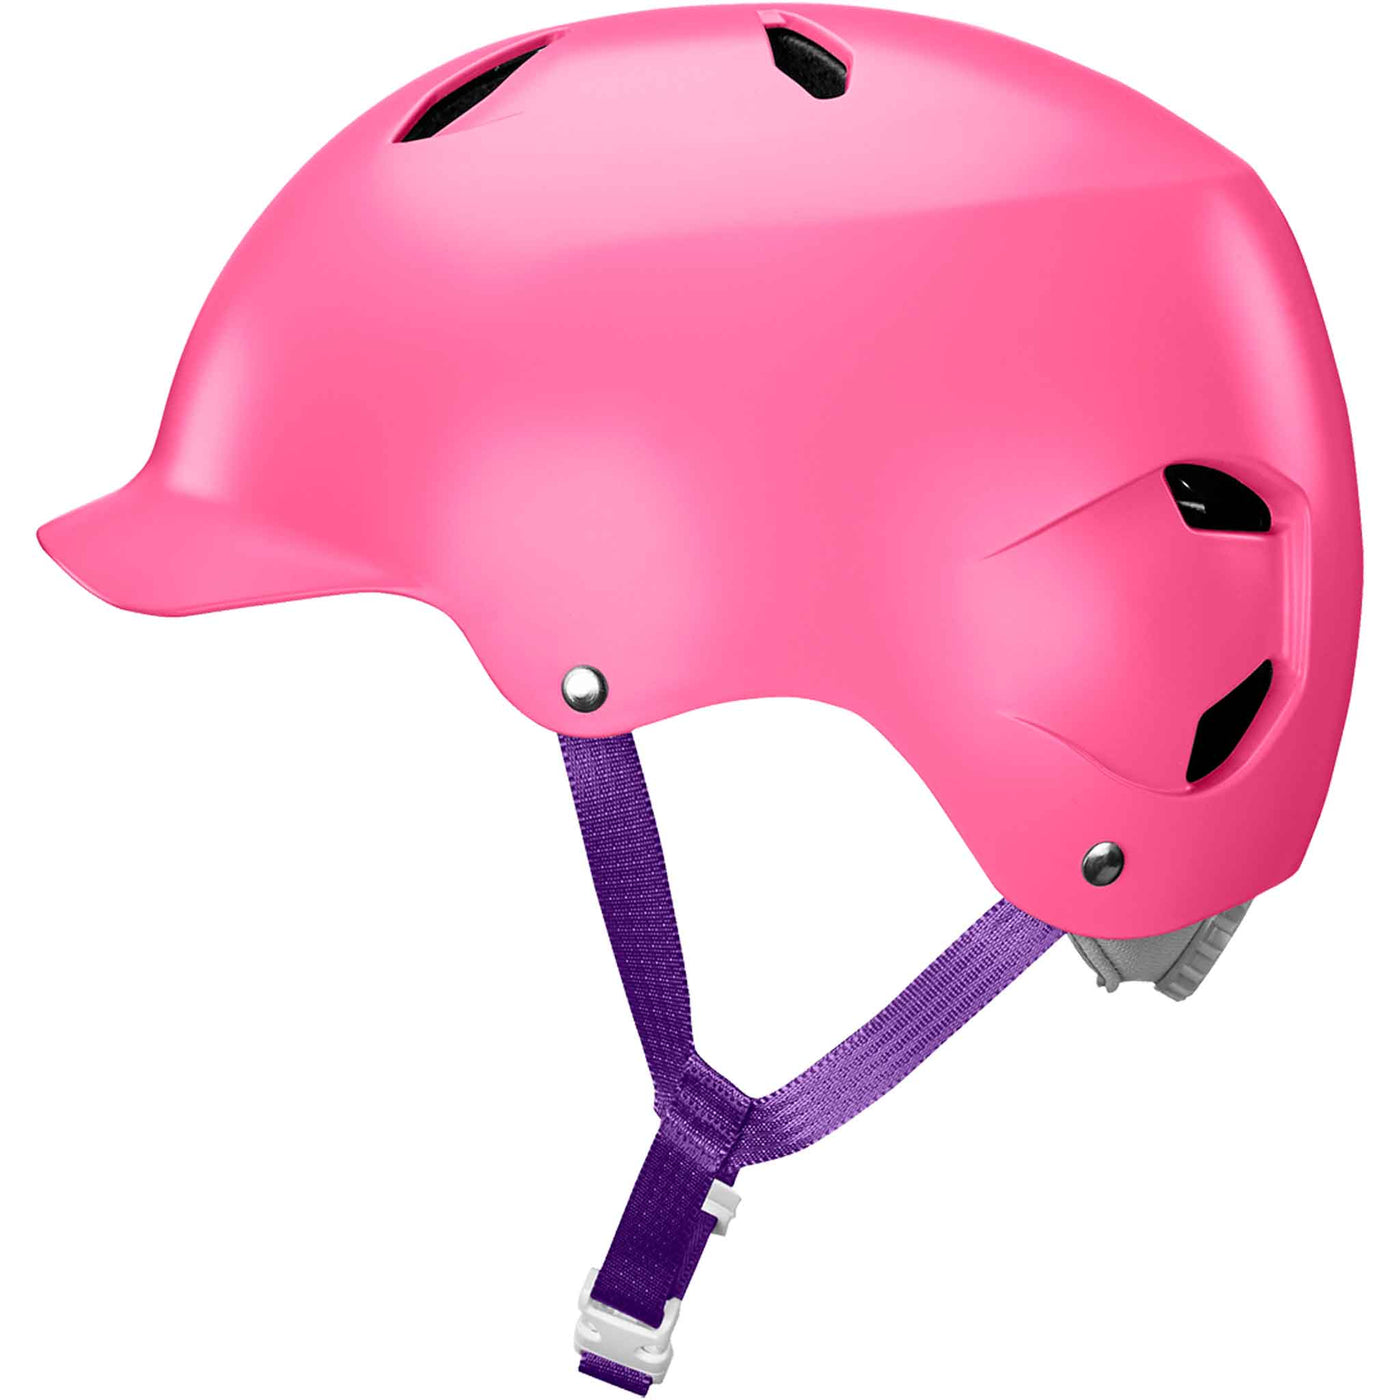 Bandito Youth Bike Helmet